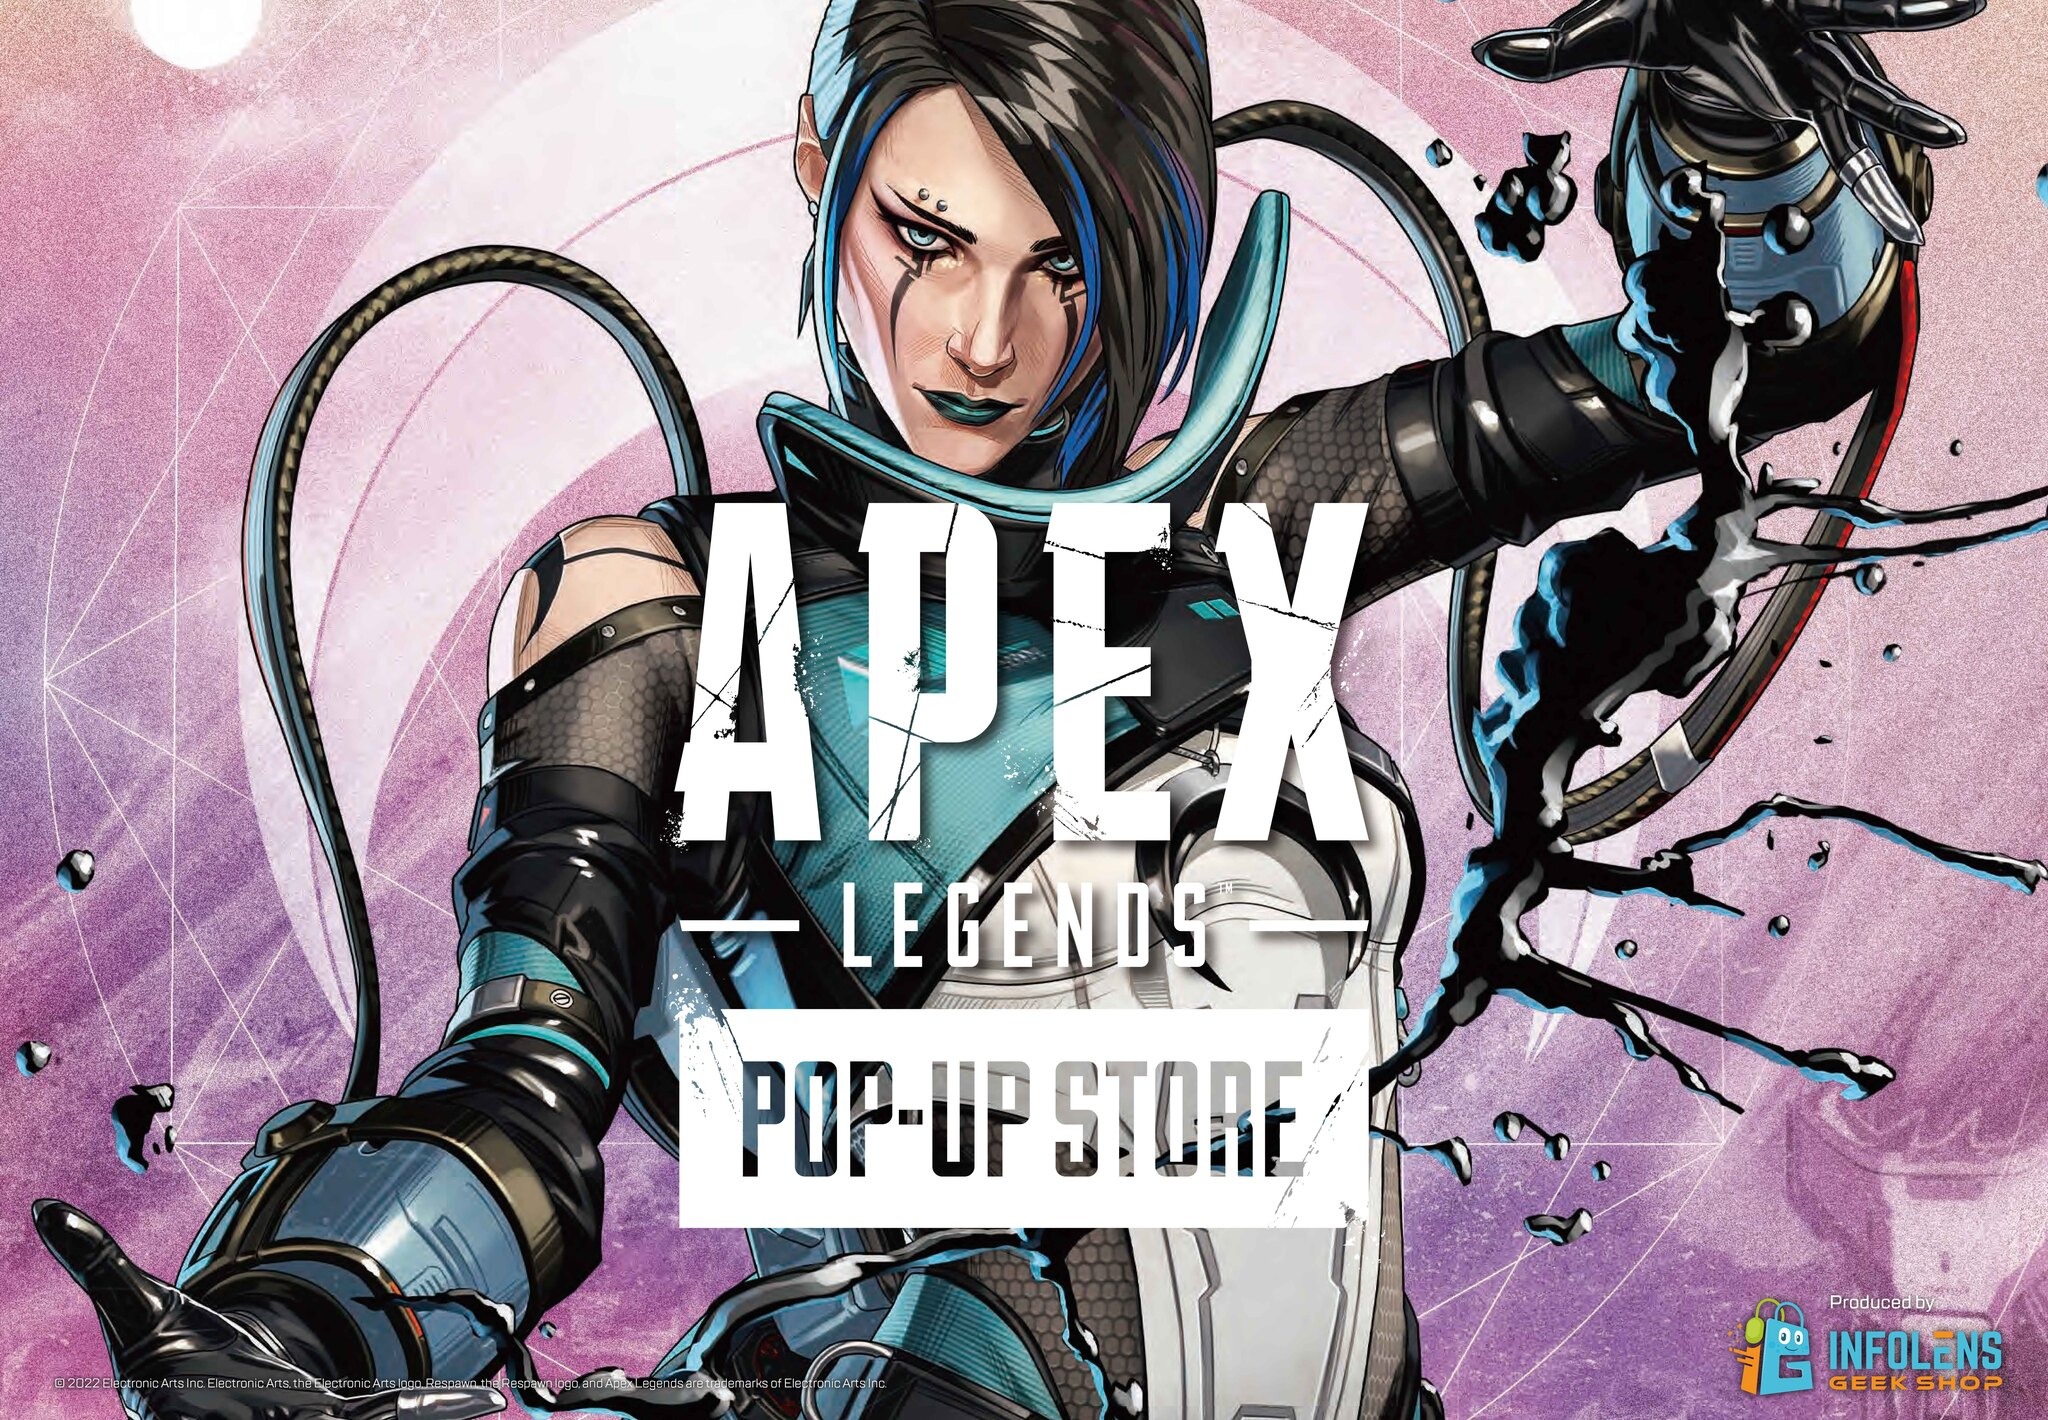 『Apex Legends』のPOP-UP STOREが、11月25日から広島に展開 